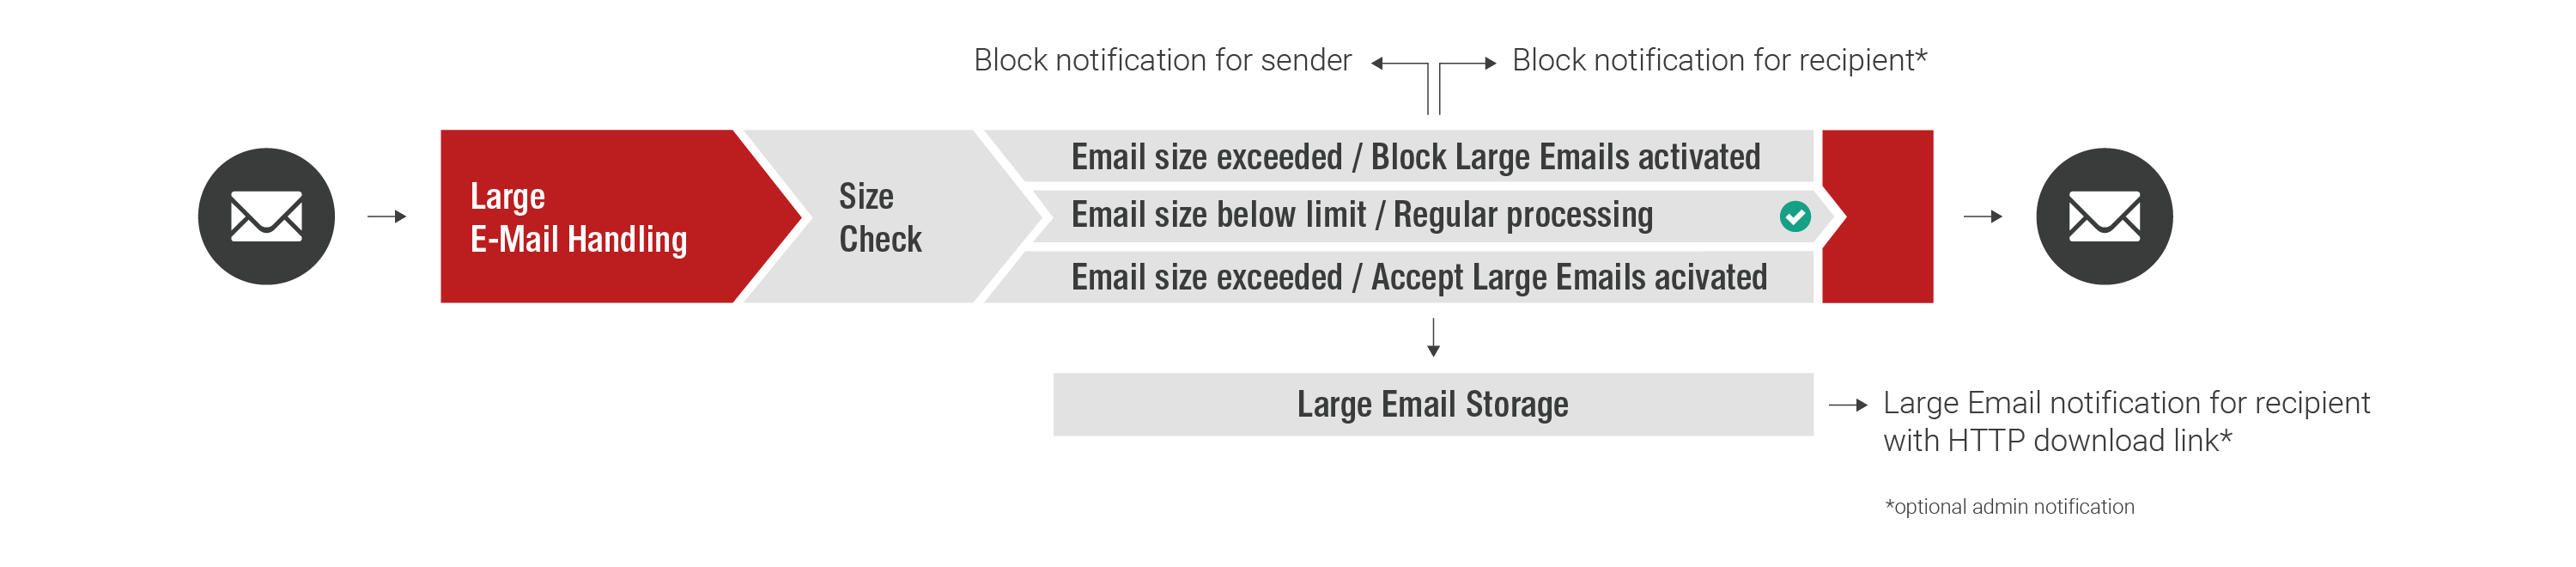 Large E-Mail Handling